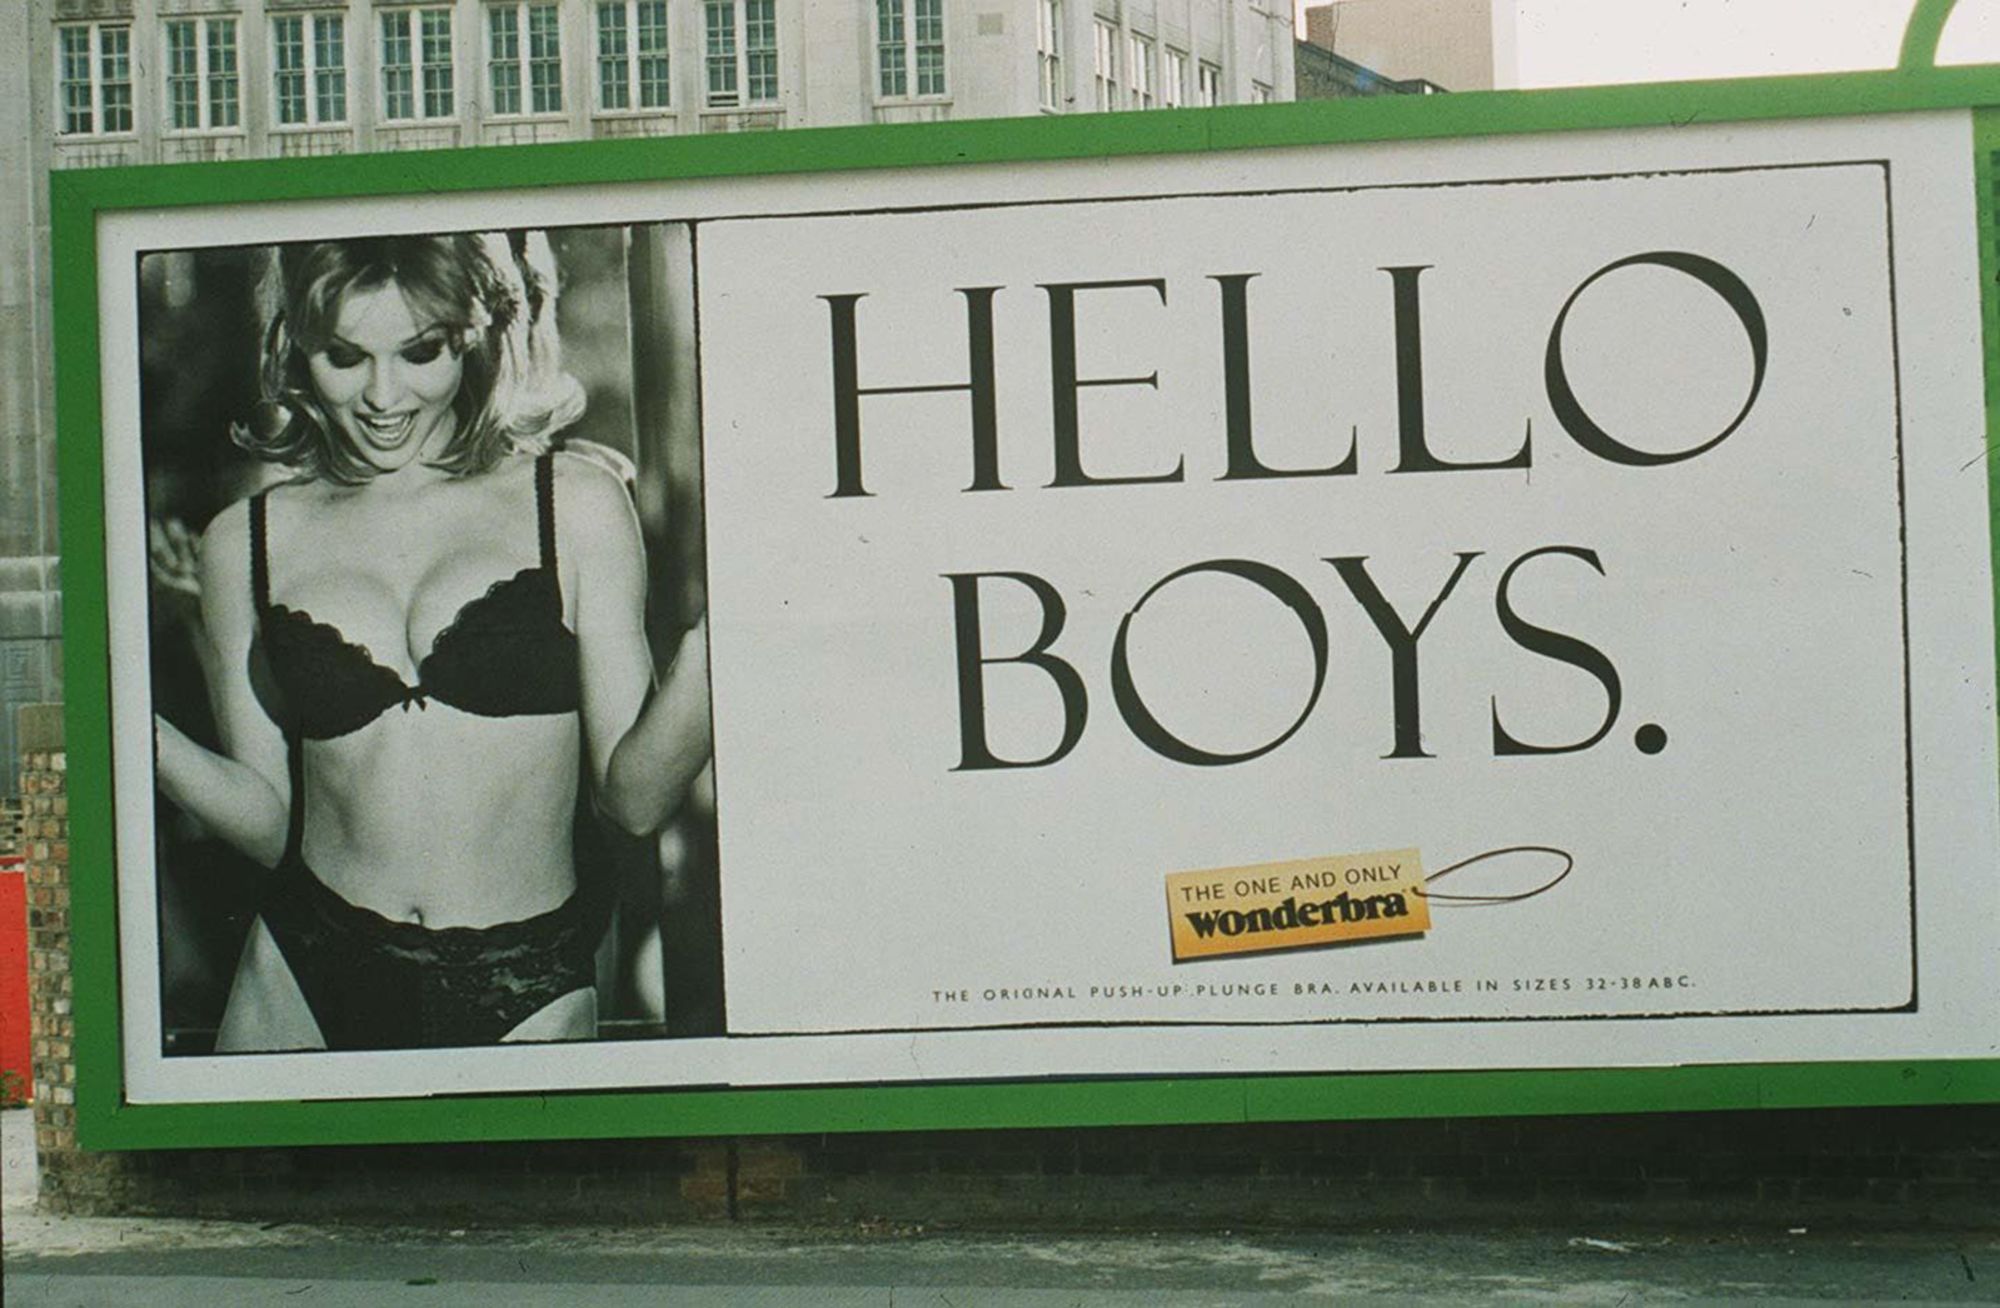 1990s 1994 Iconic Wonderbra Advertisement featuring Eva Herzigova